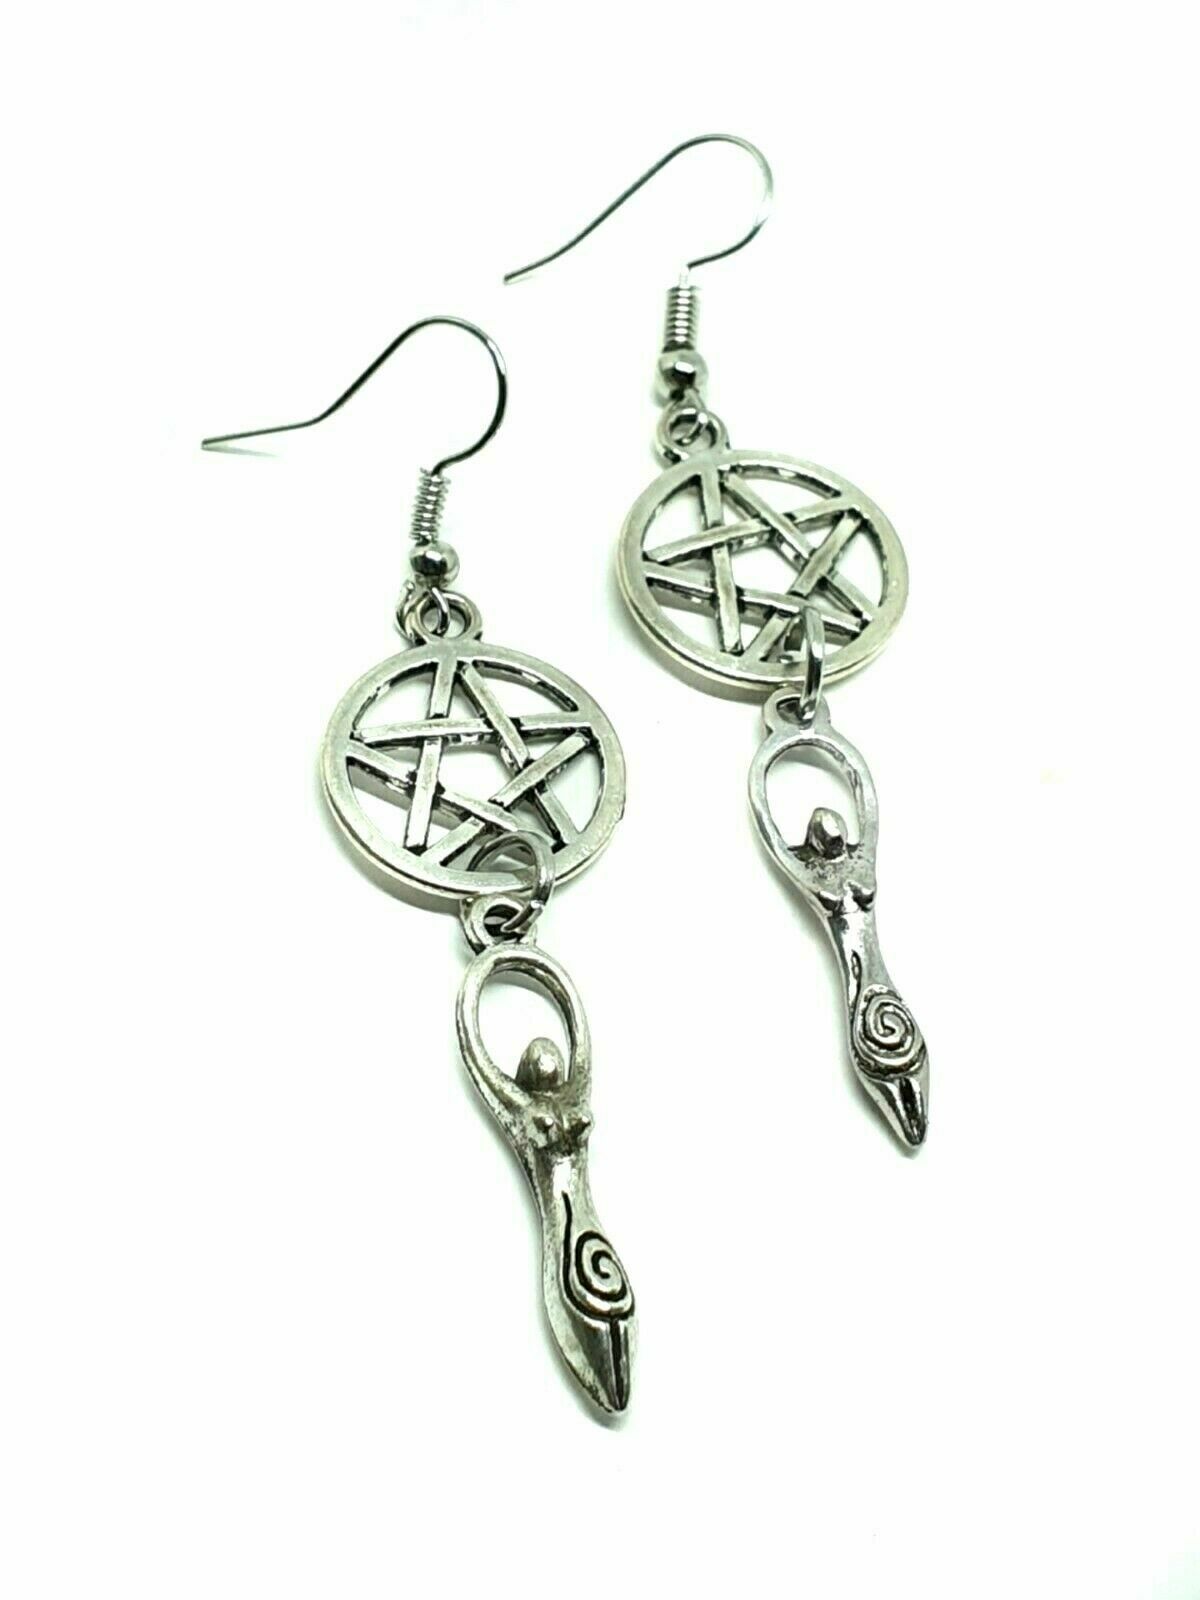 Pentacle & Spiral Goddess Earrings Pentagram Pagan Wiccan Gaia Moon Goddess eclectic shop uk ltd